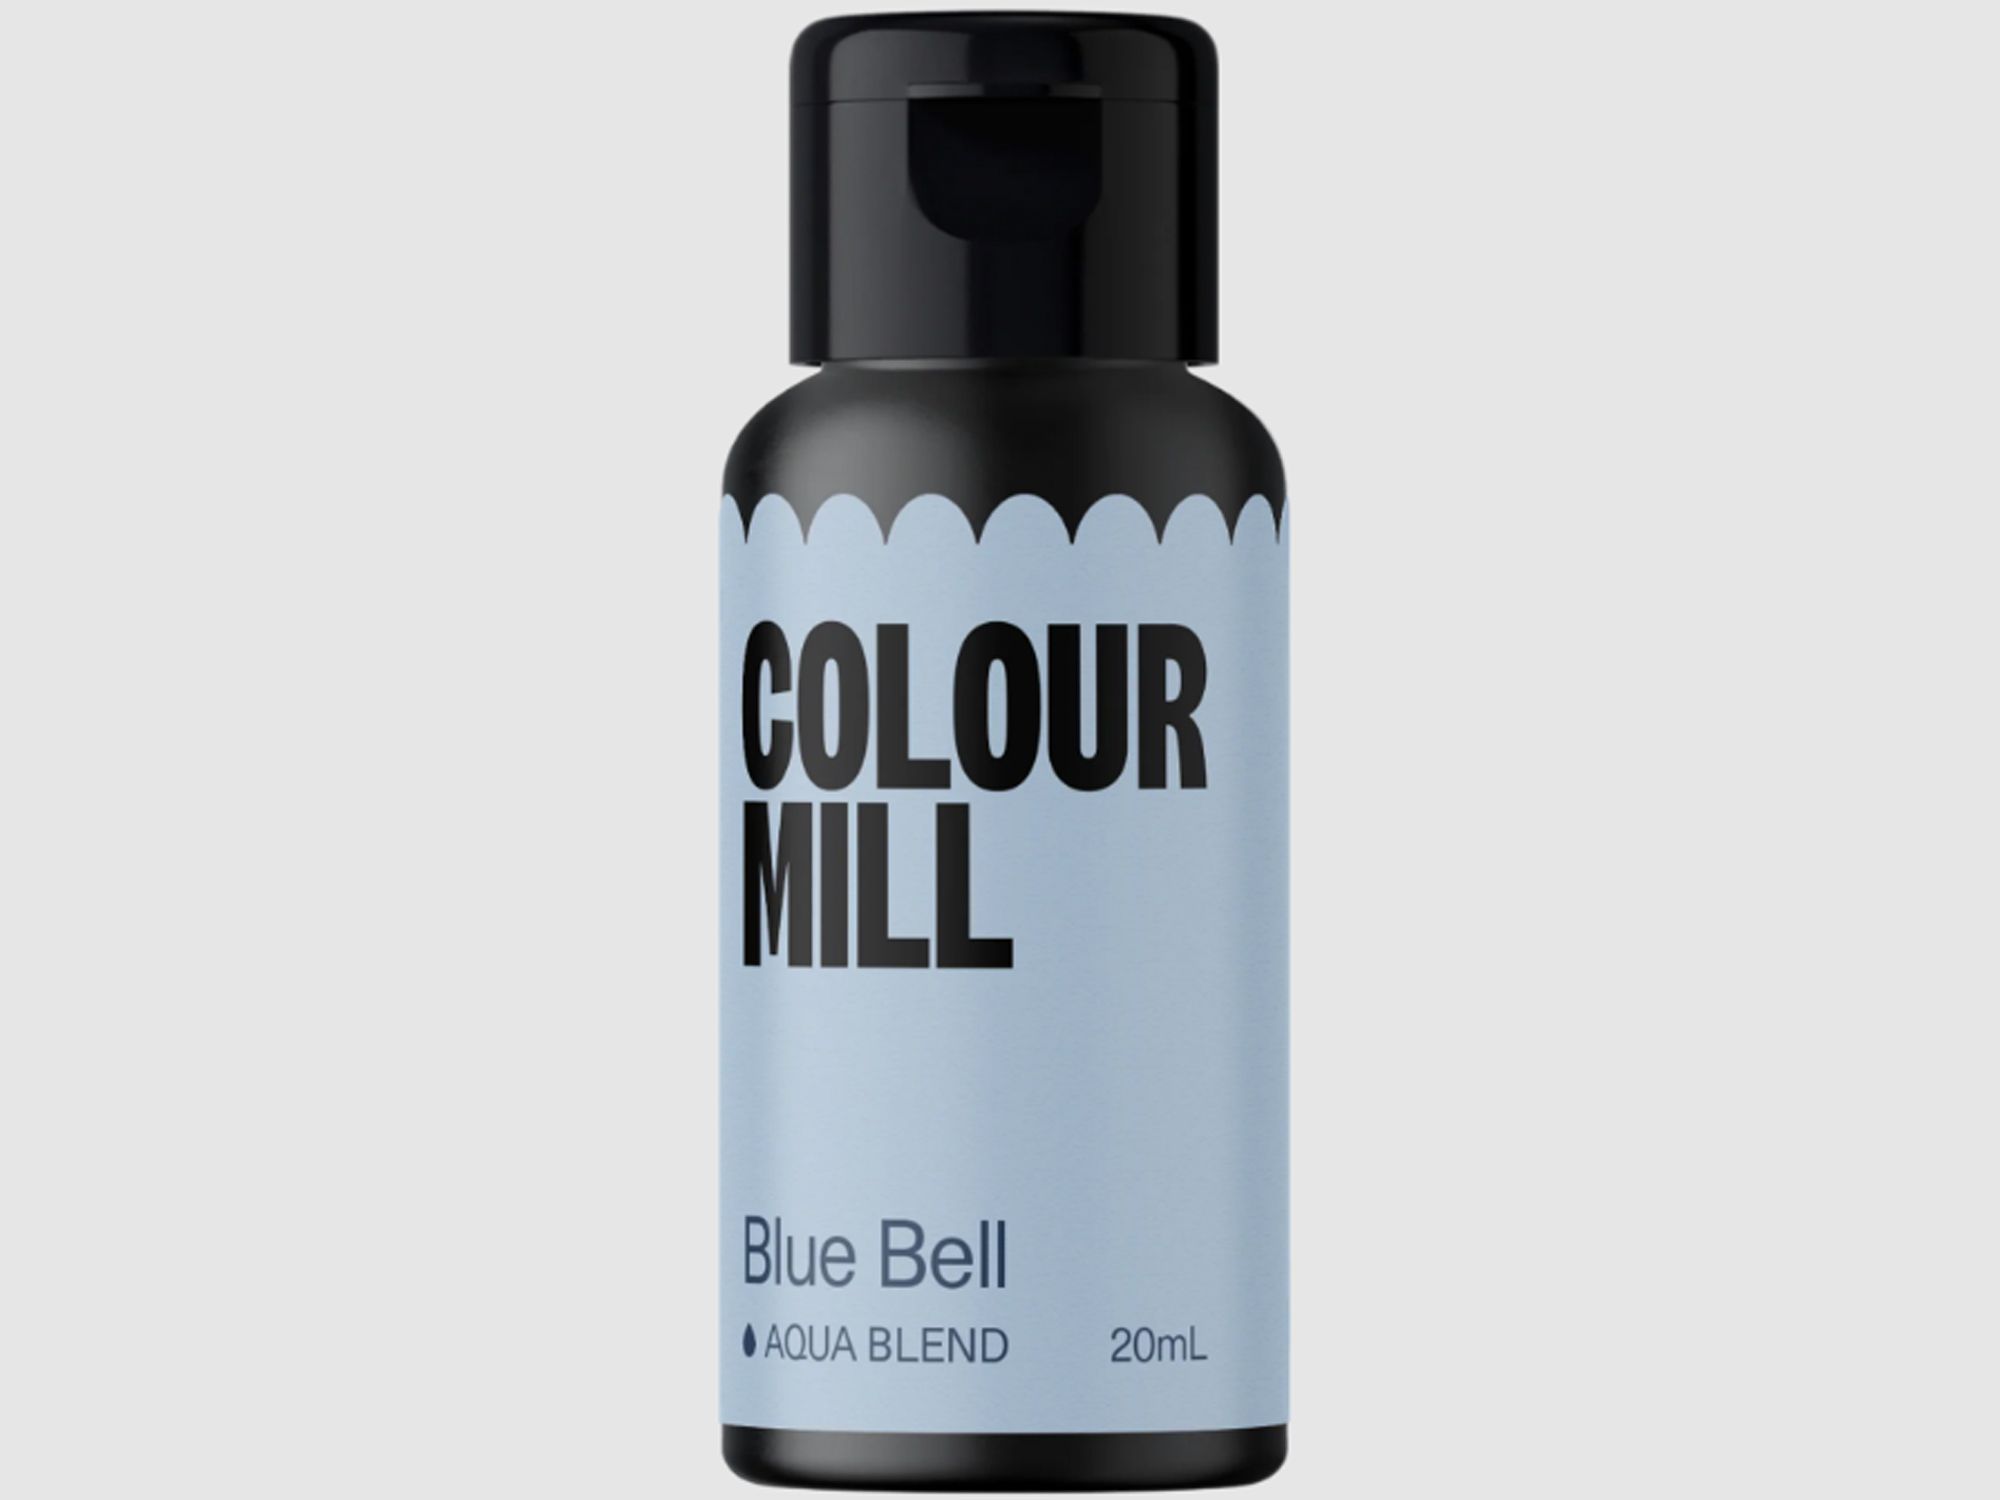 Colour Mill Blue Bell (Aqua Blend) 20ml